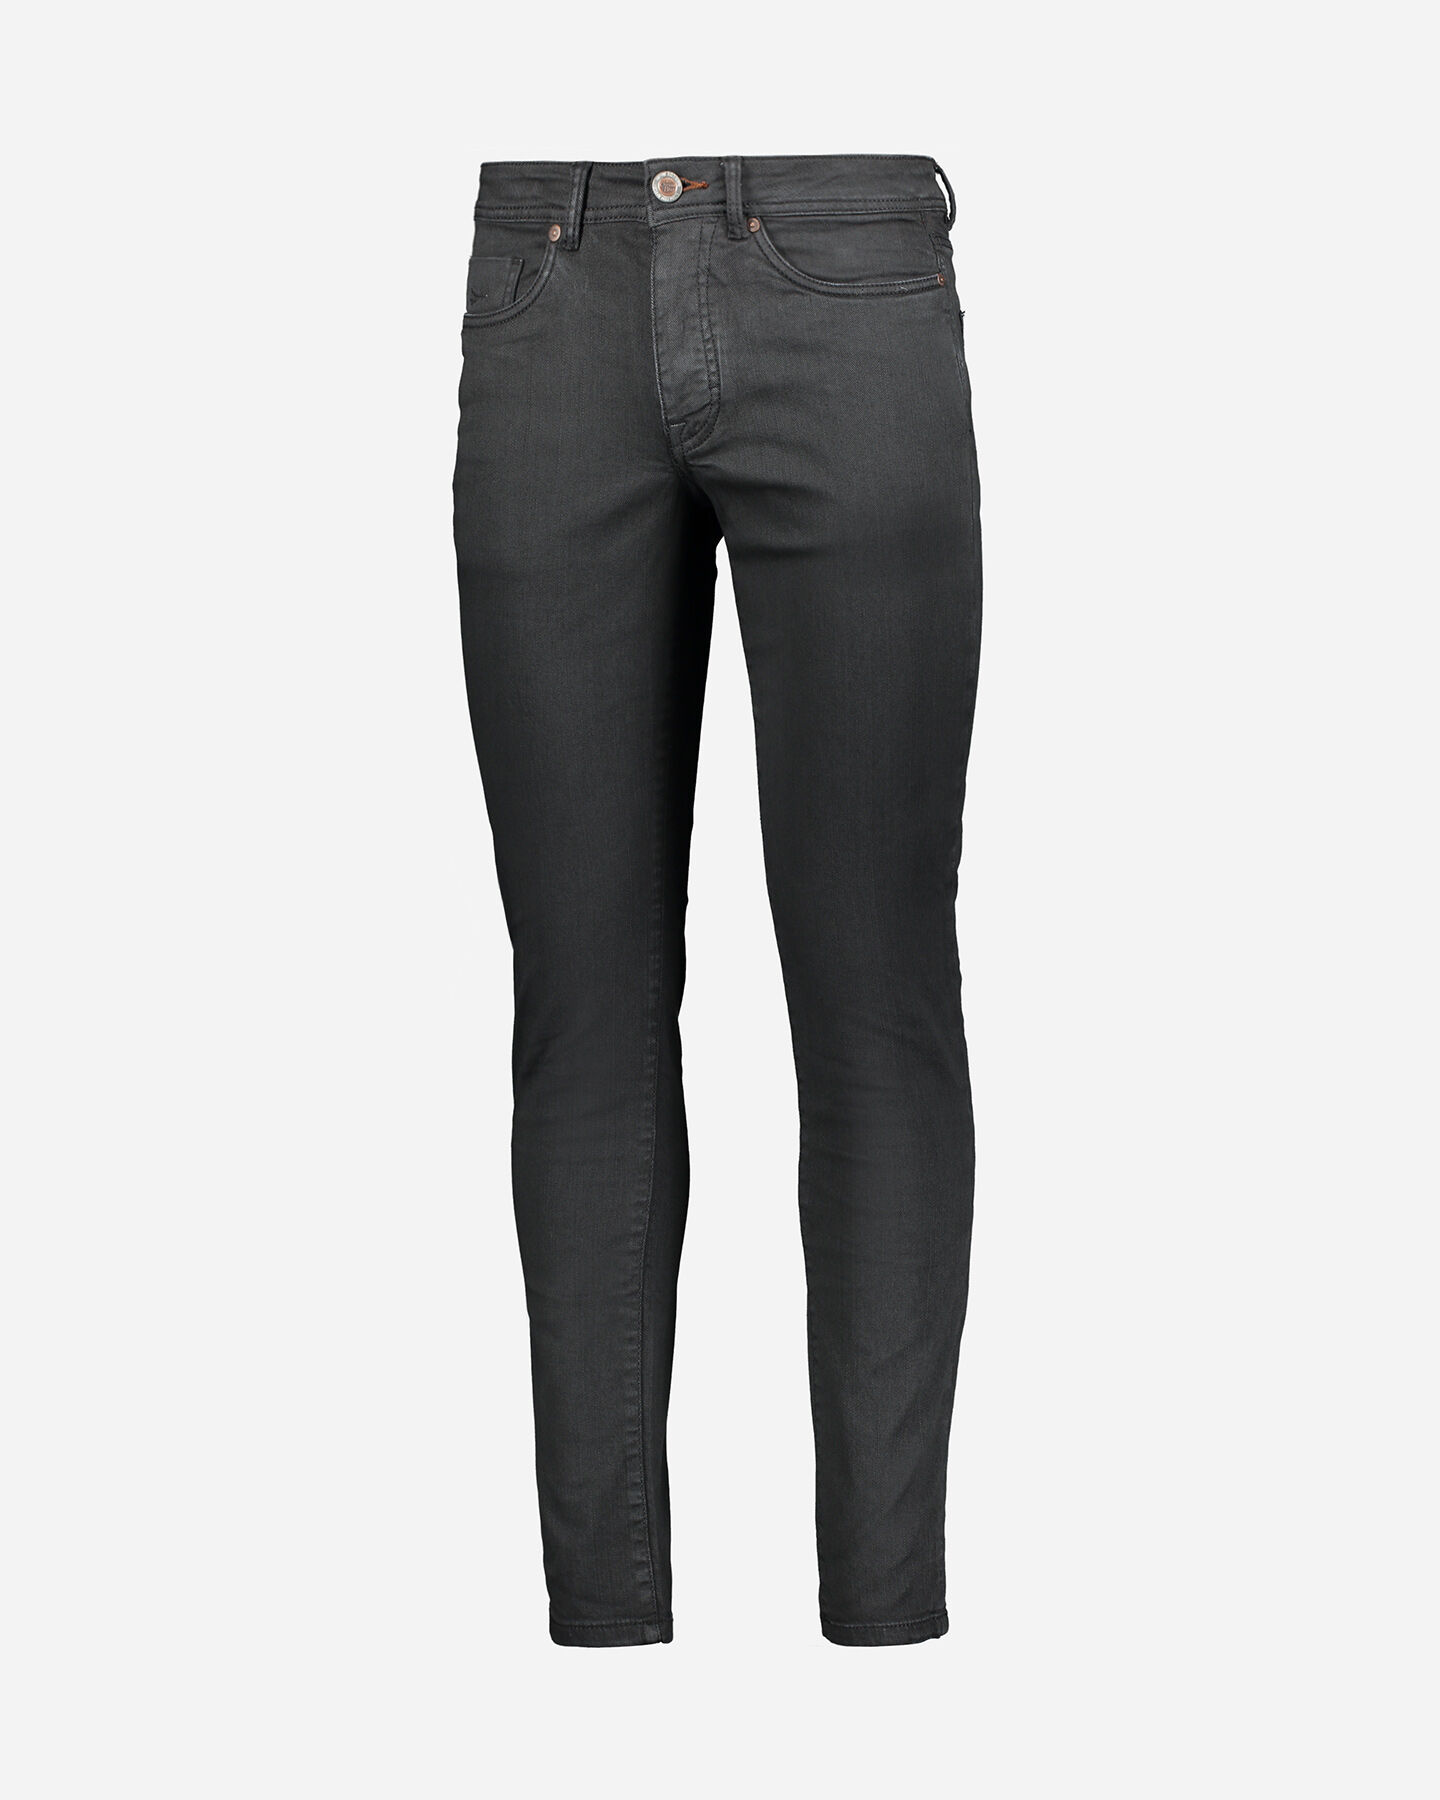  Jeans COTTON BELT 5T HAMILTON SLIM M S4070900|52|30 scatto 5